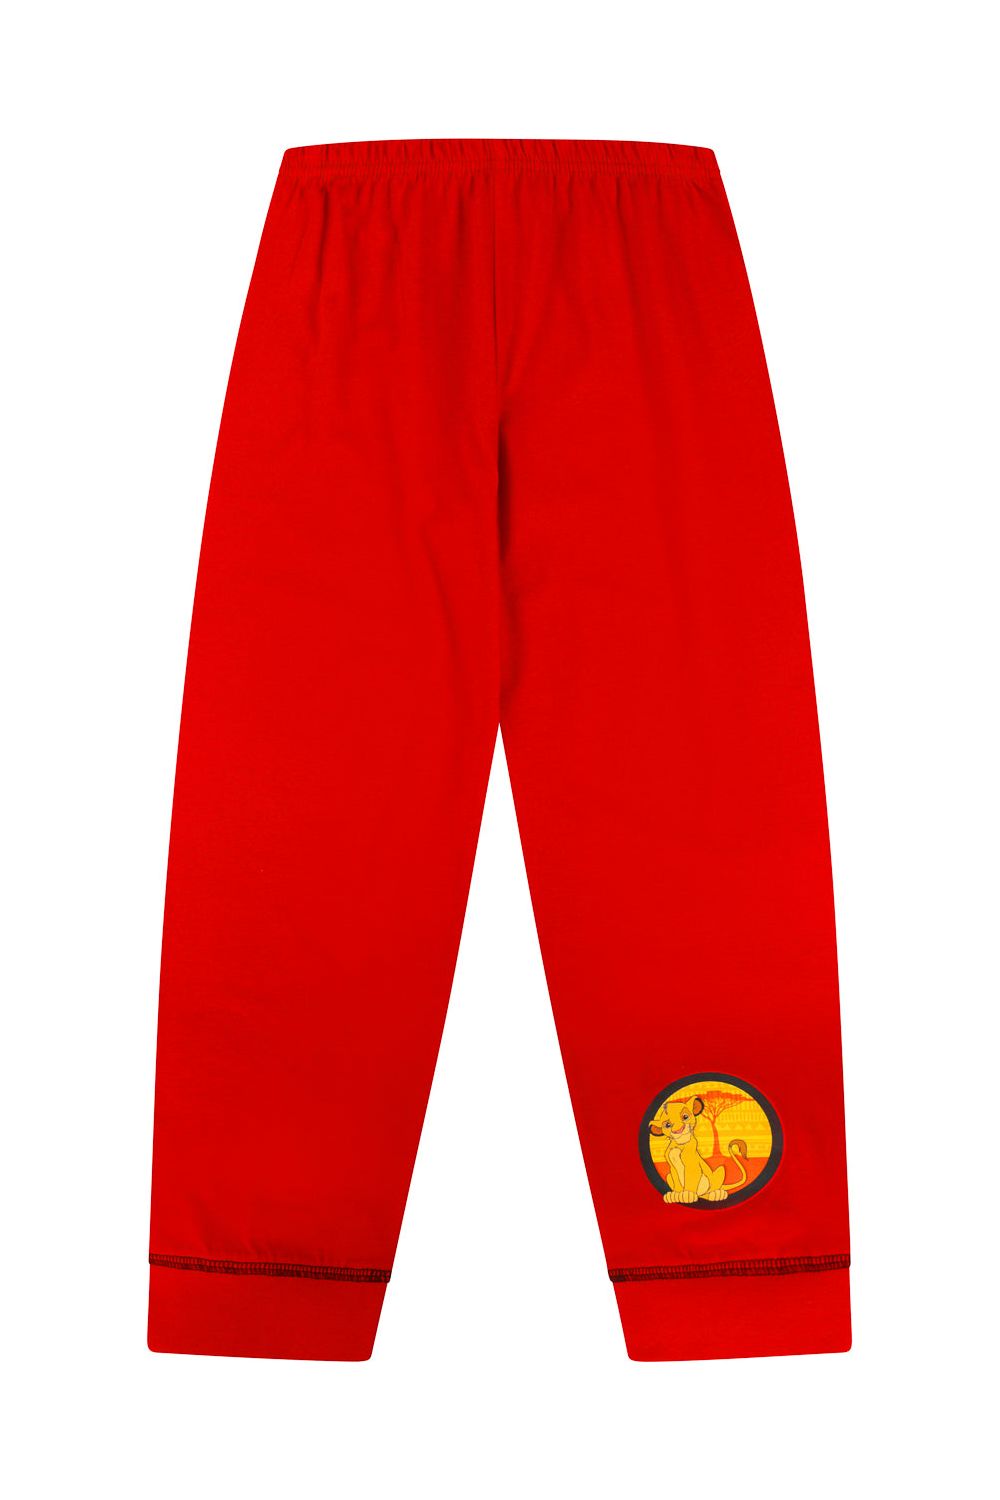 Cool Disney Lion King Future King Long Pyjamas - Pyjamas.com